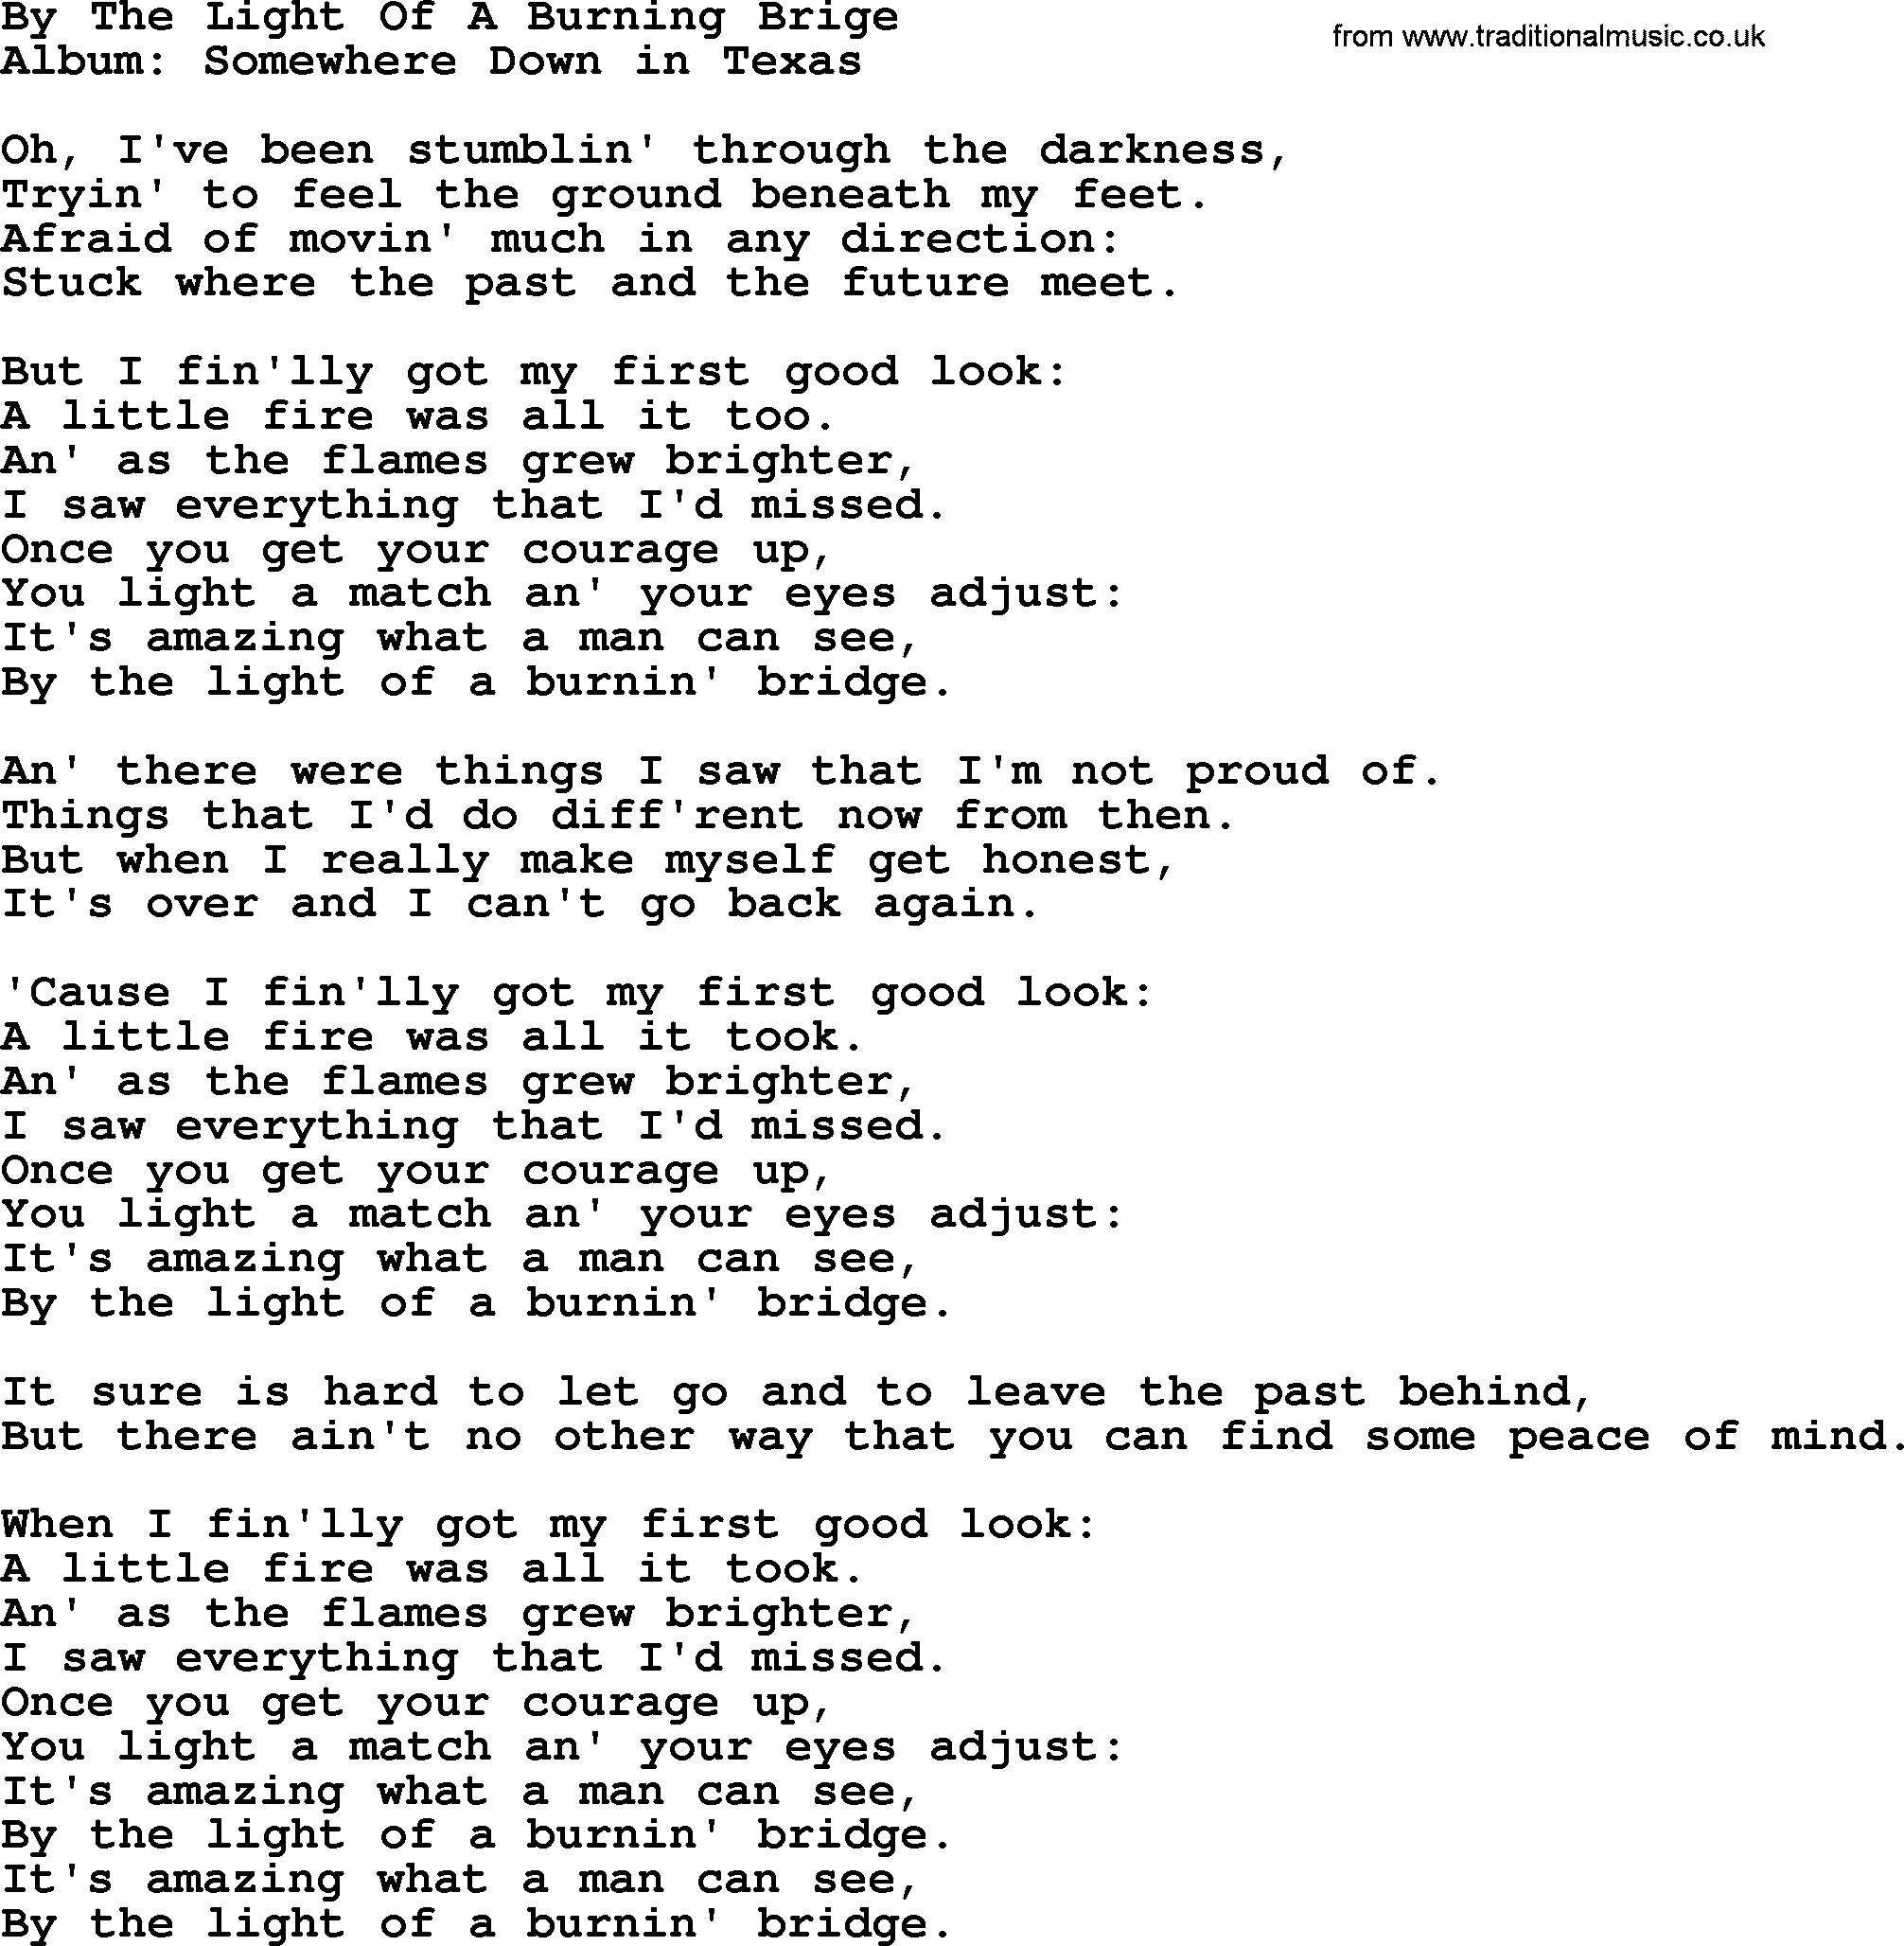 By The Light Of A Burning Brige, by George Strait - lyrics